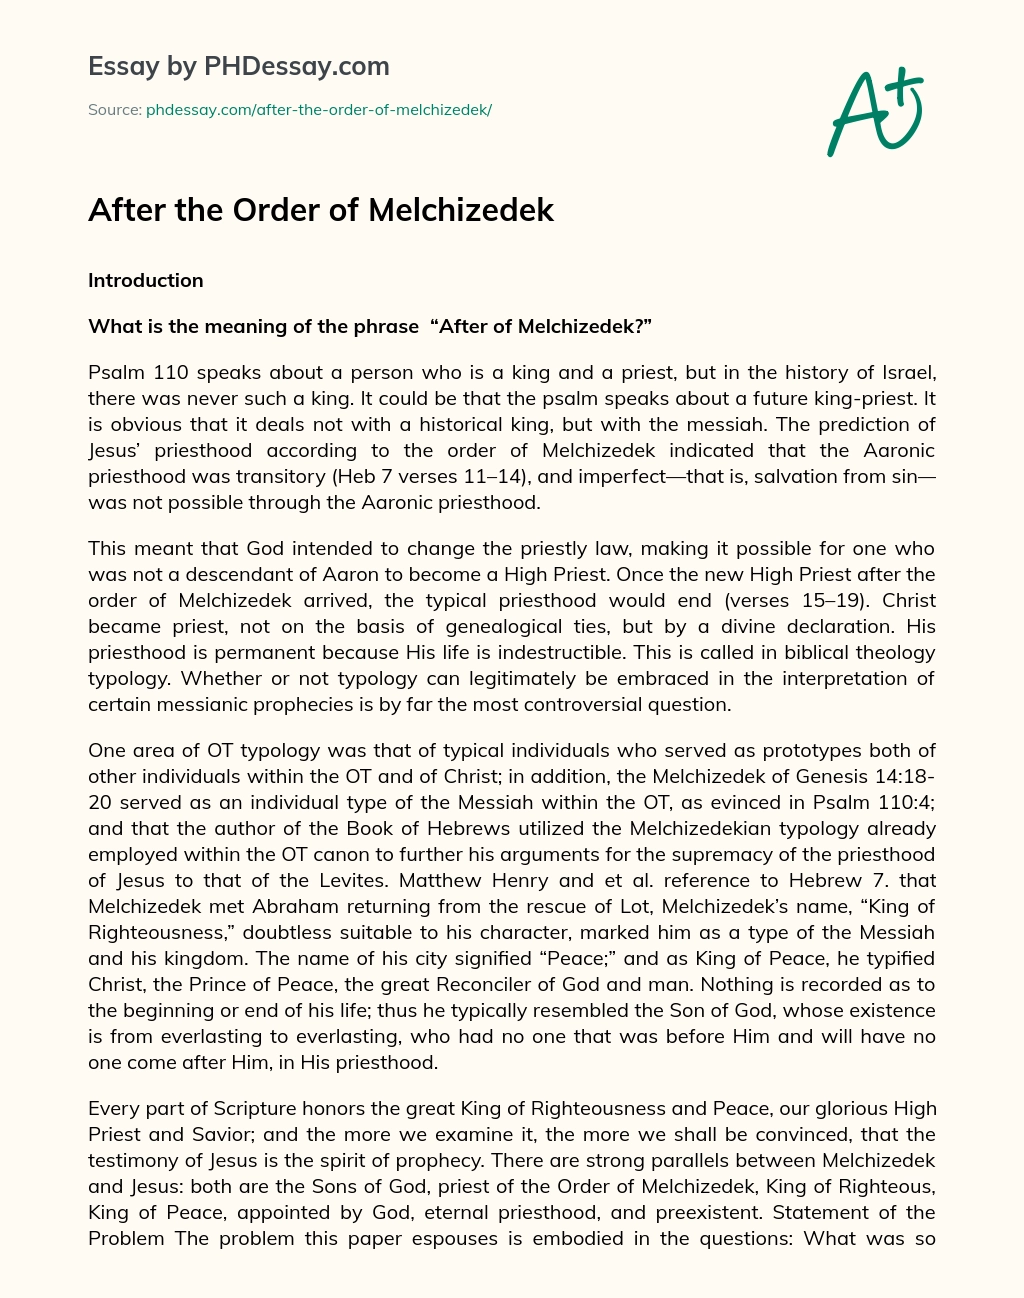 After the Order of Melchizedek essay